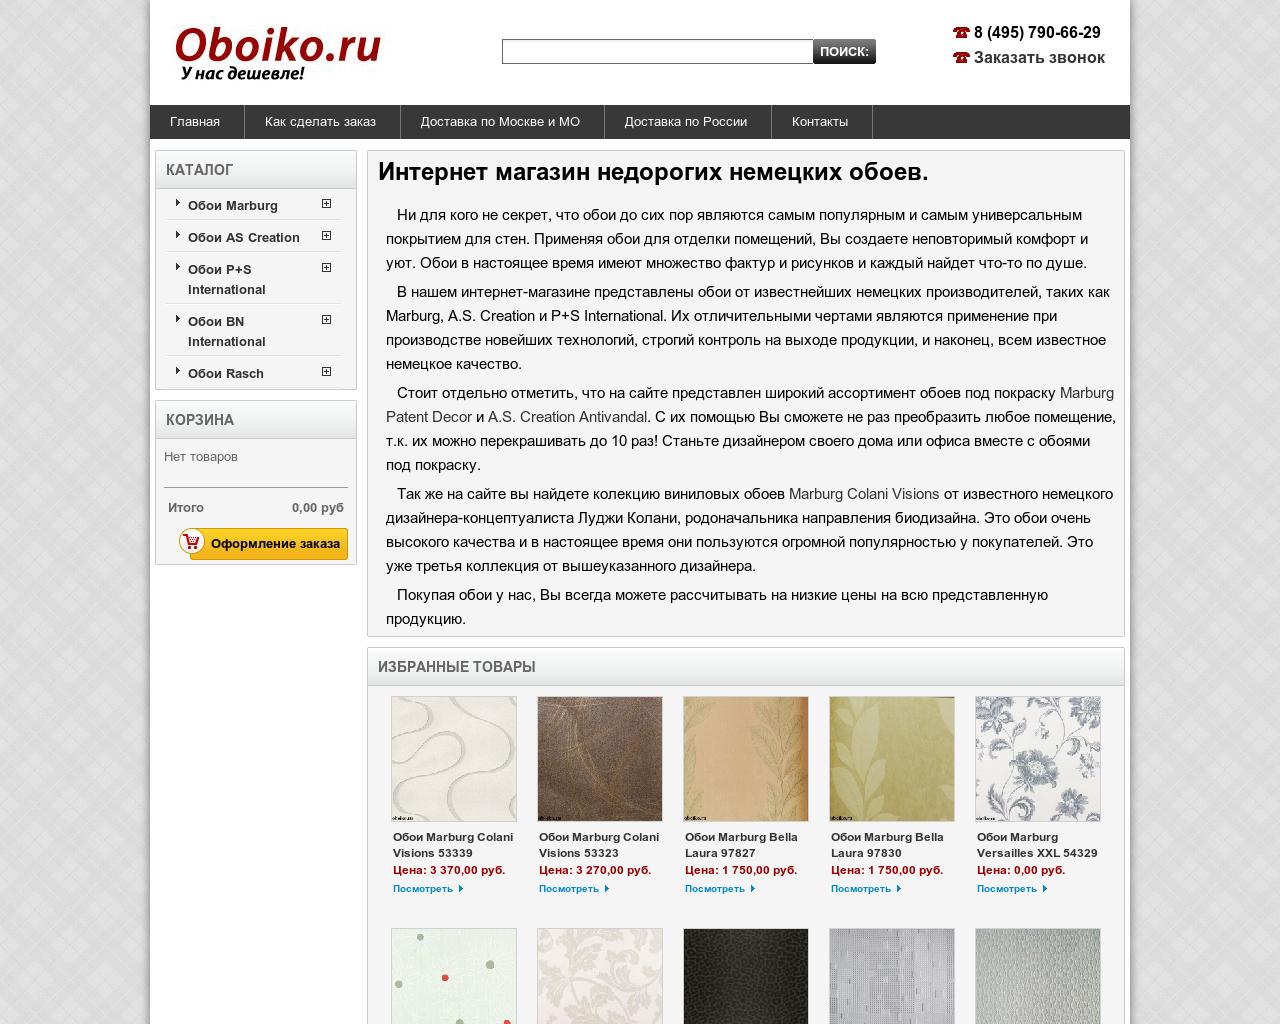 Изображение сайта oboiko.ru в разрешении 1280x1024